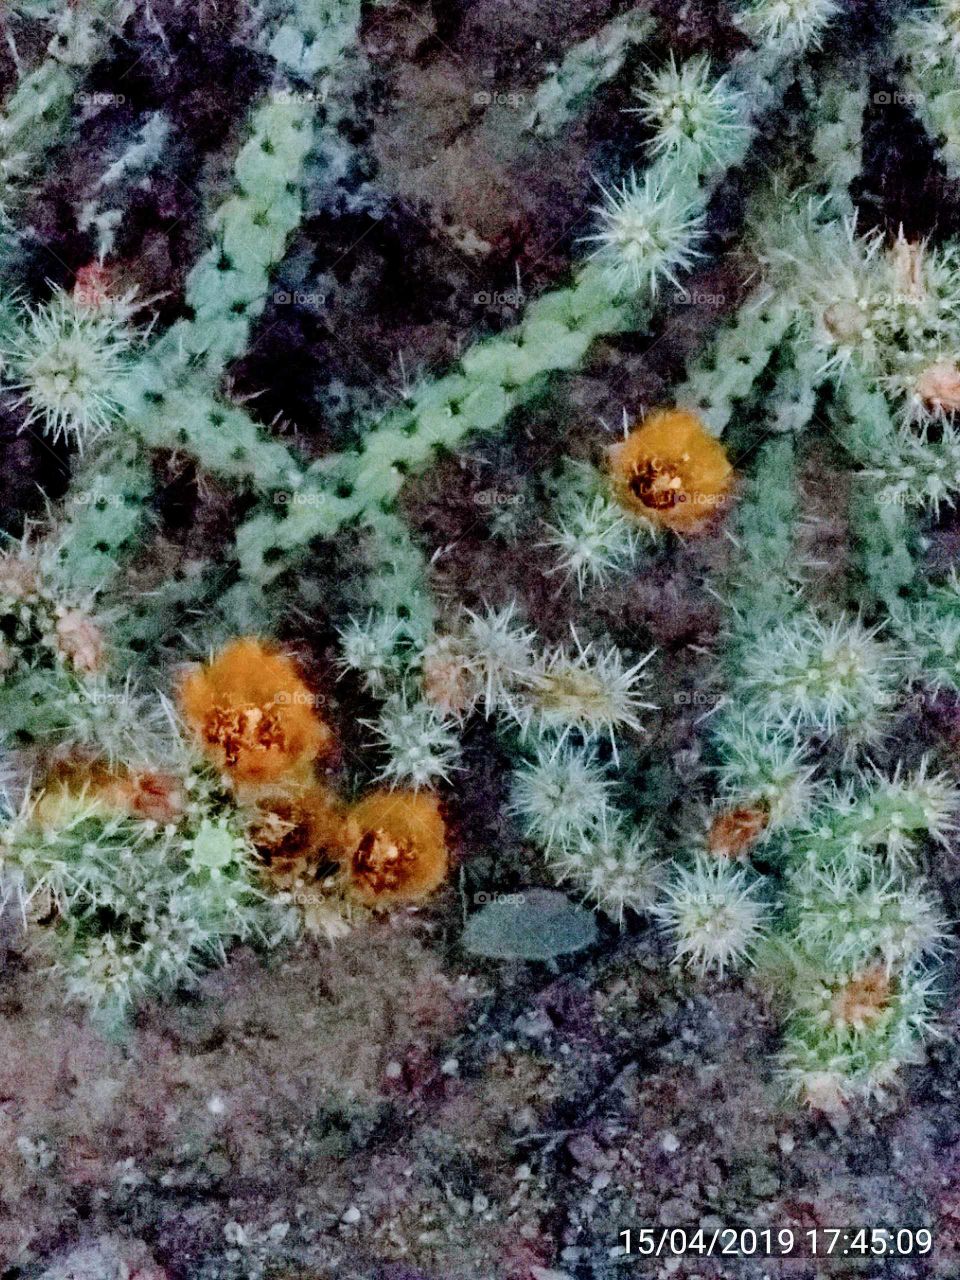 Cholla type cactus with bright orange flowers